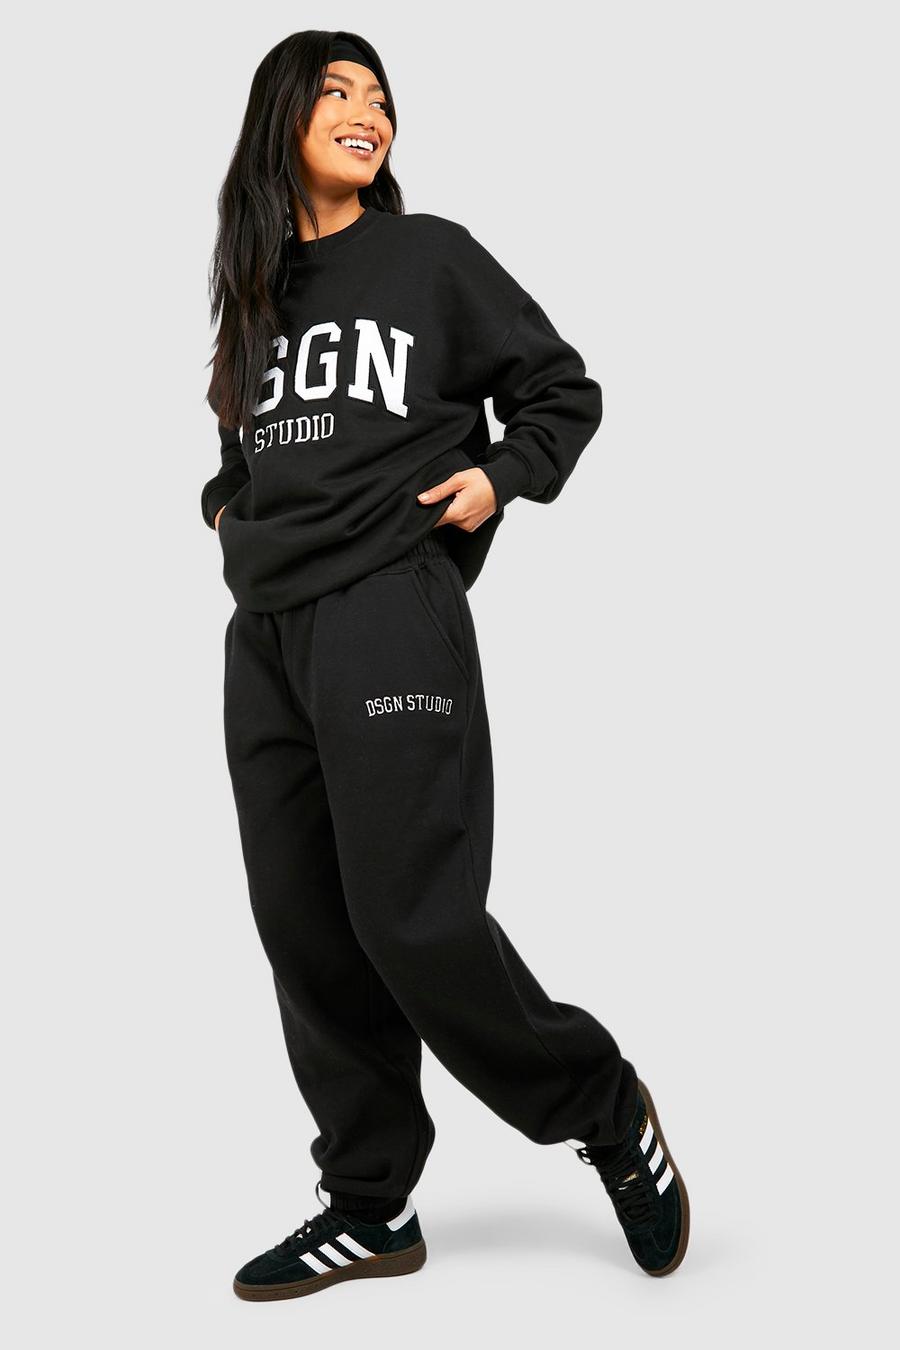 Pantalón deportivo oversize con aplique Dsgn Studio, Black